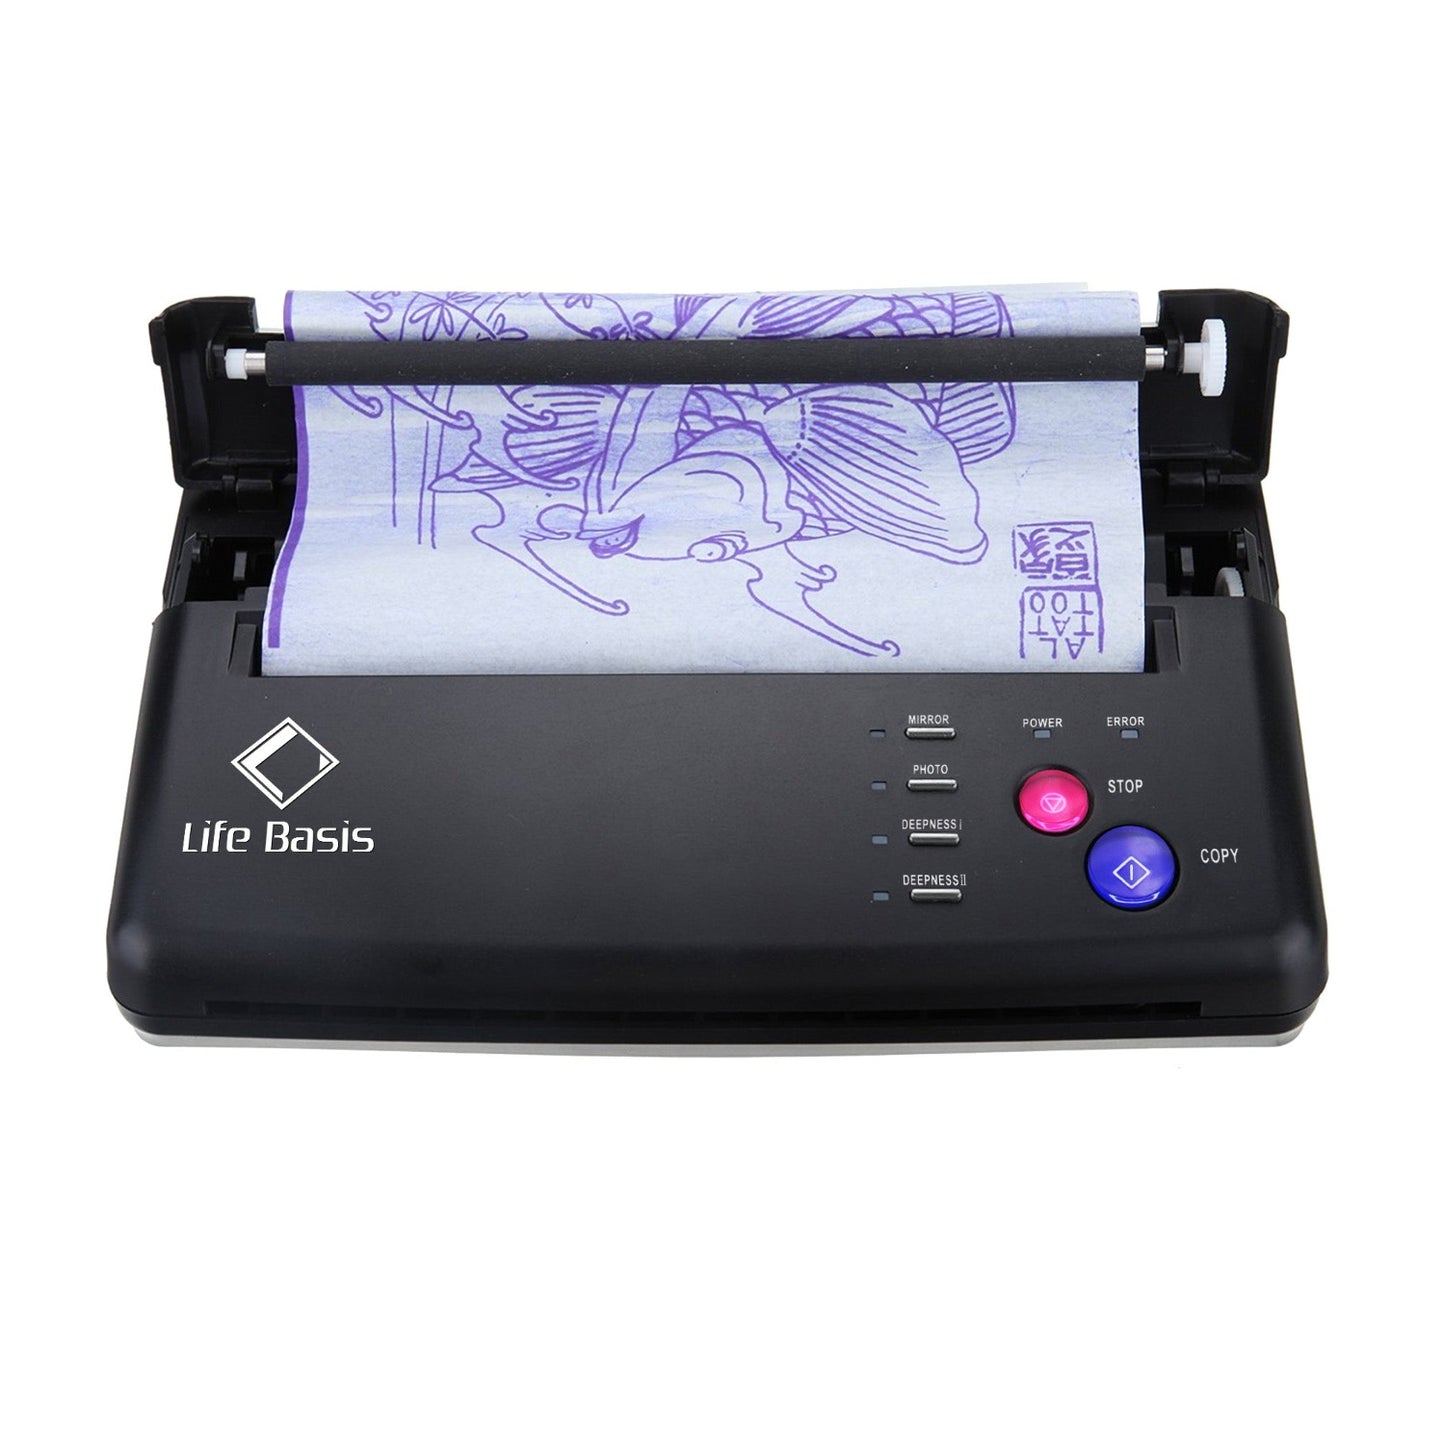 Life Basis Tattoo Stencil Transfer Machine Thermal Tattoo Kit Copier Printer  and Permanent Tattoos Free 10pcs Transfer Paper Silver 